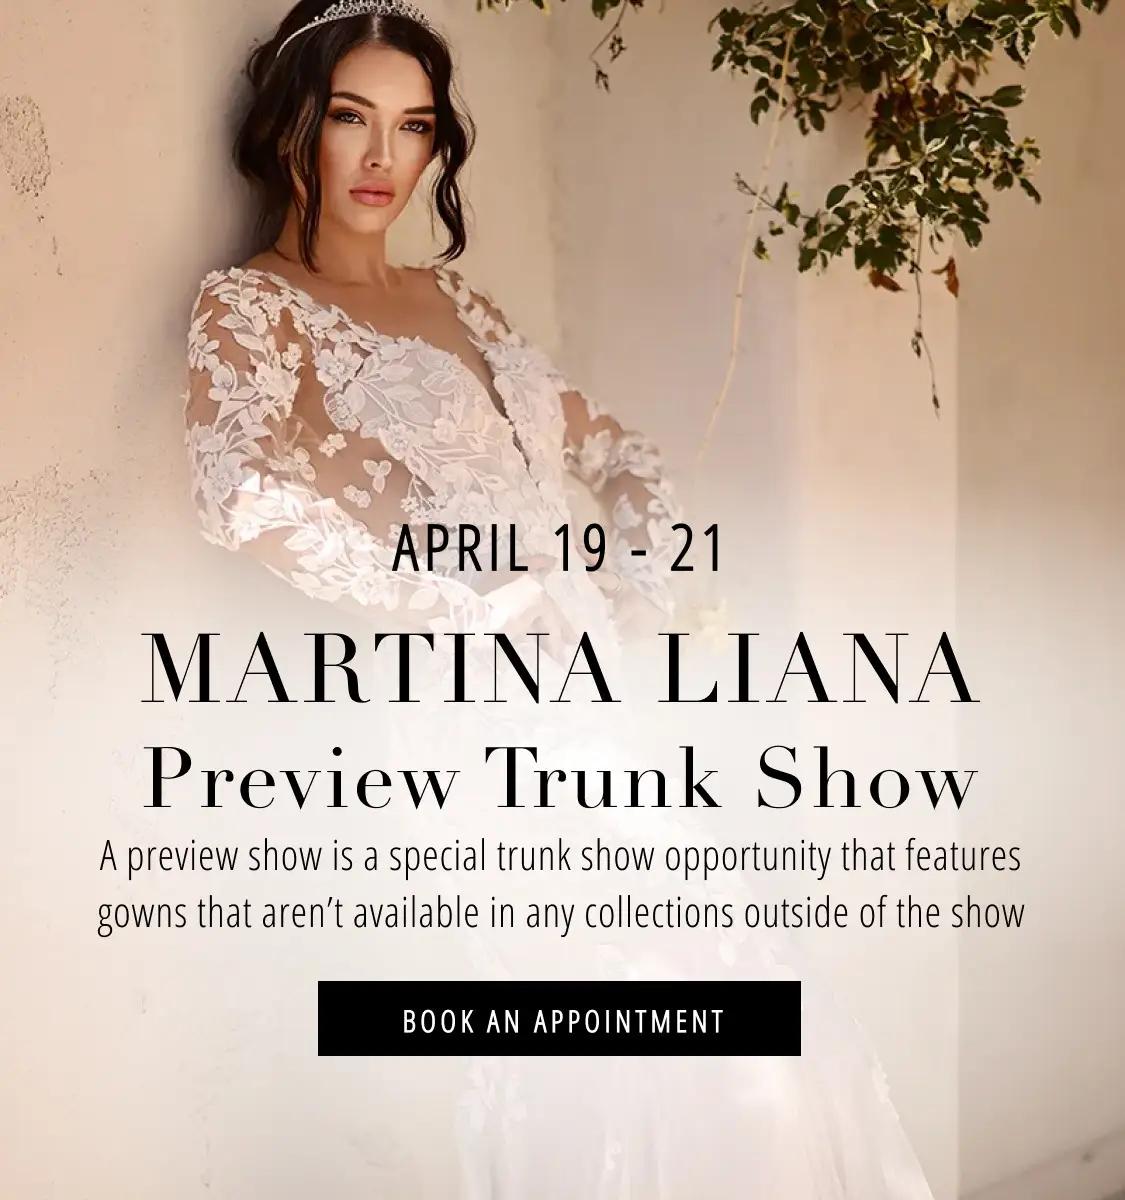 Martina Liana Trunk show banner mobile